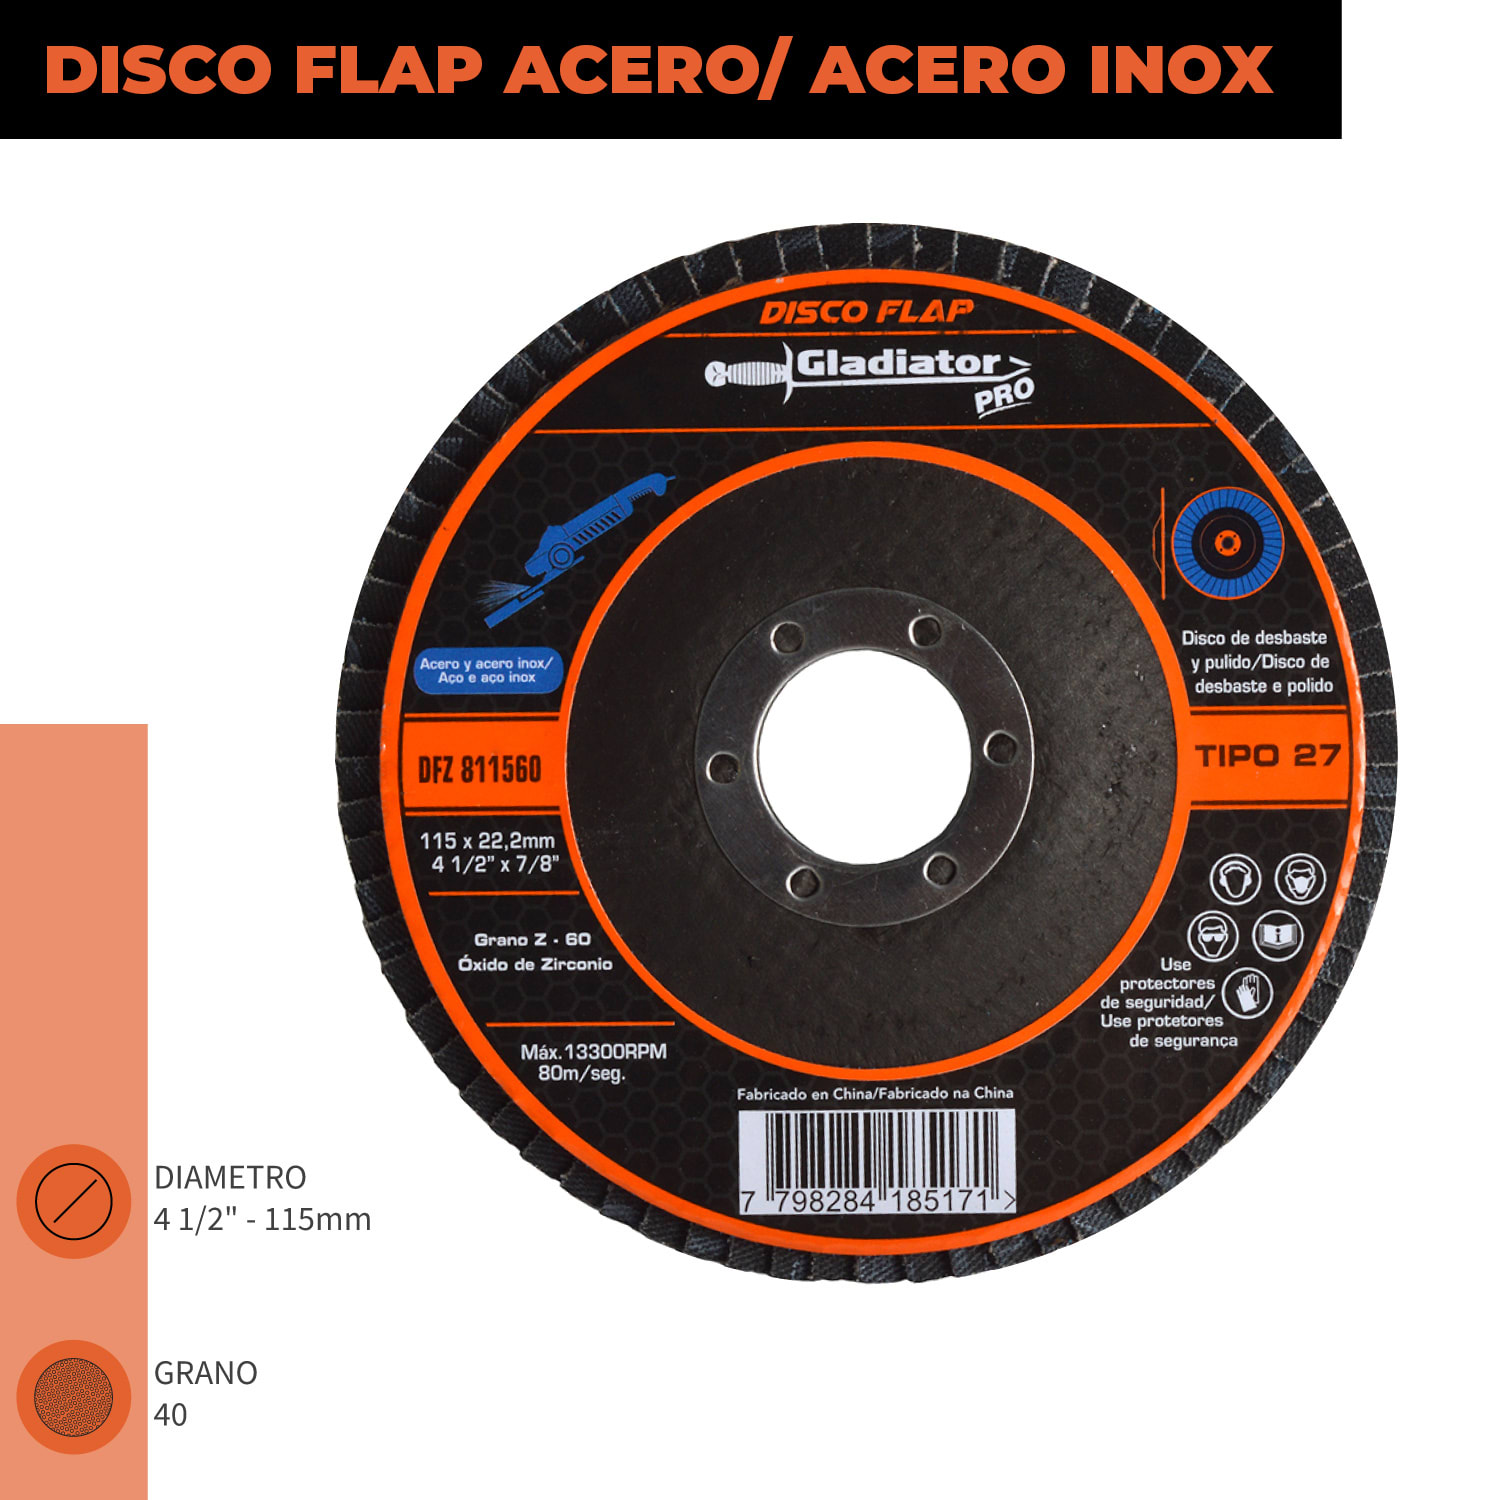 DISCO FLAP 4 1/2 ACERO/ACERO INOX GR60 DFZ 811560